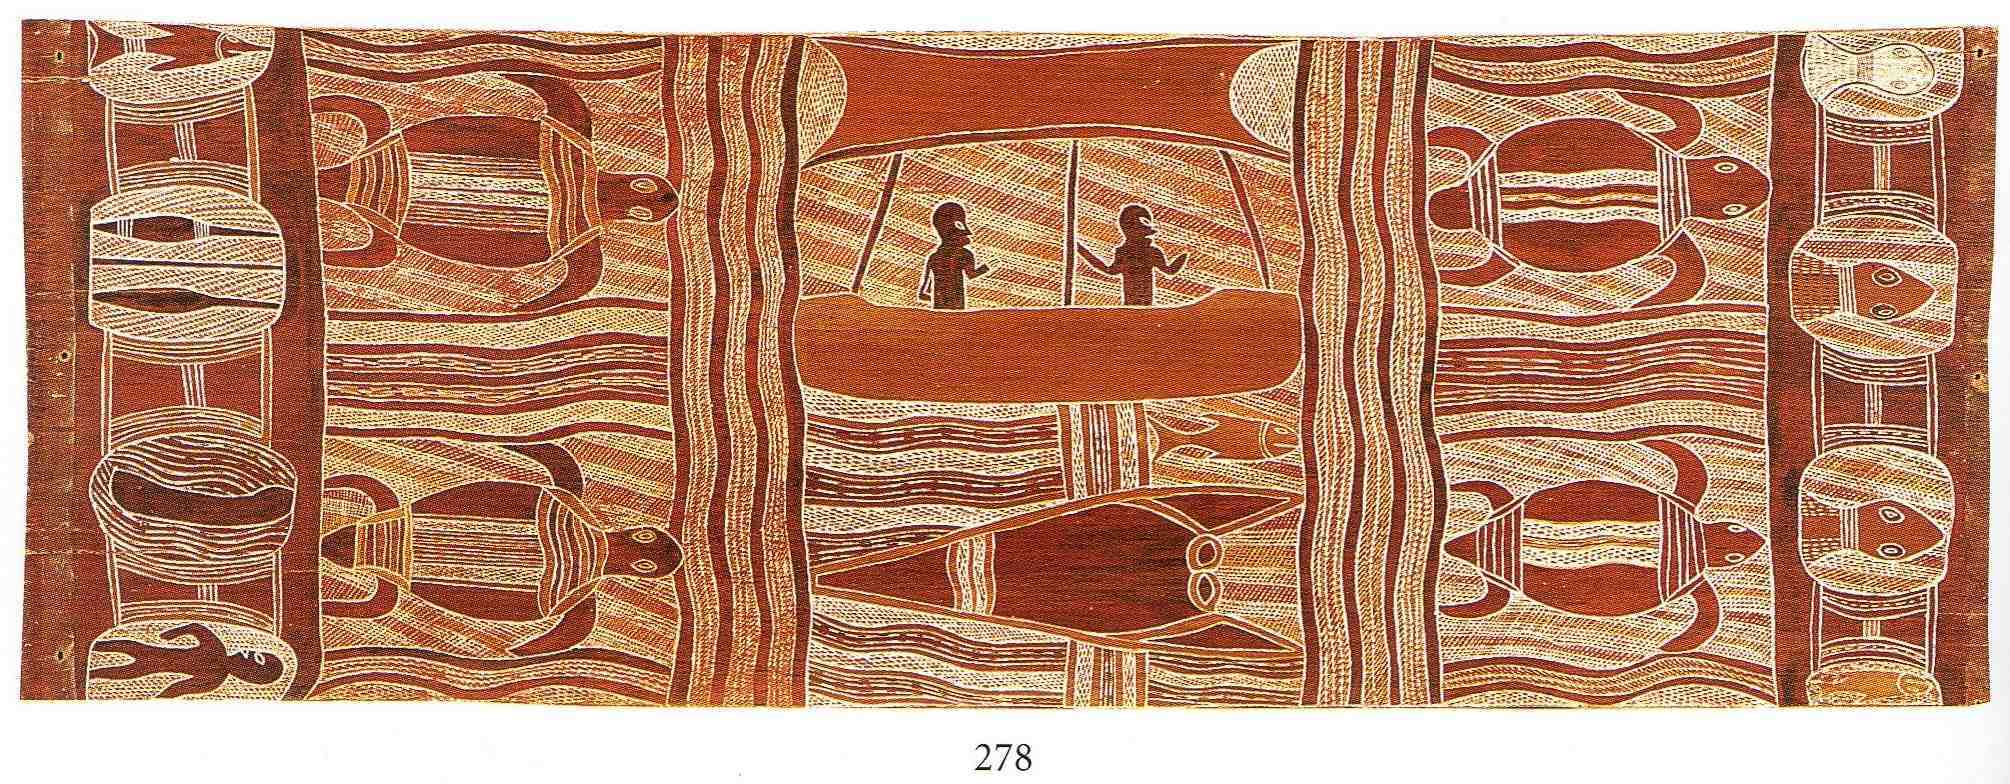 Naritzin Maymuru bark painting of a fishing story